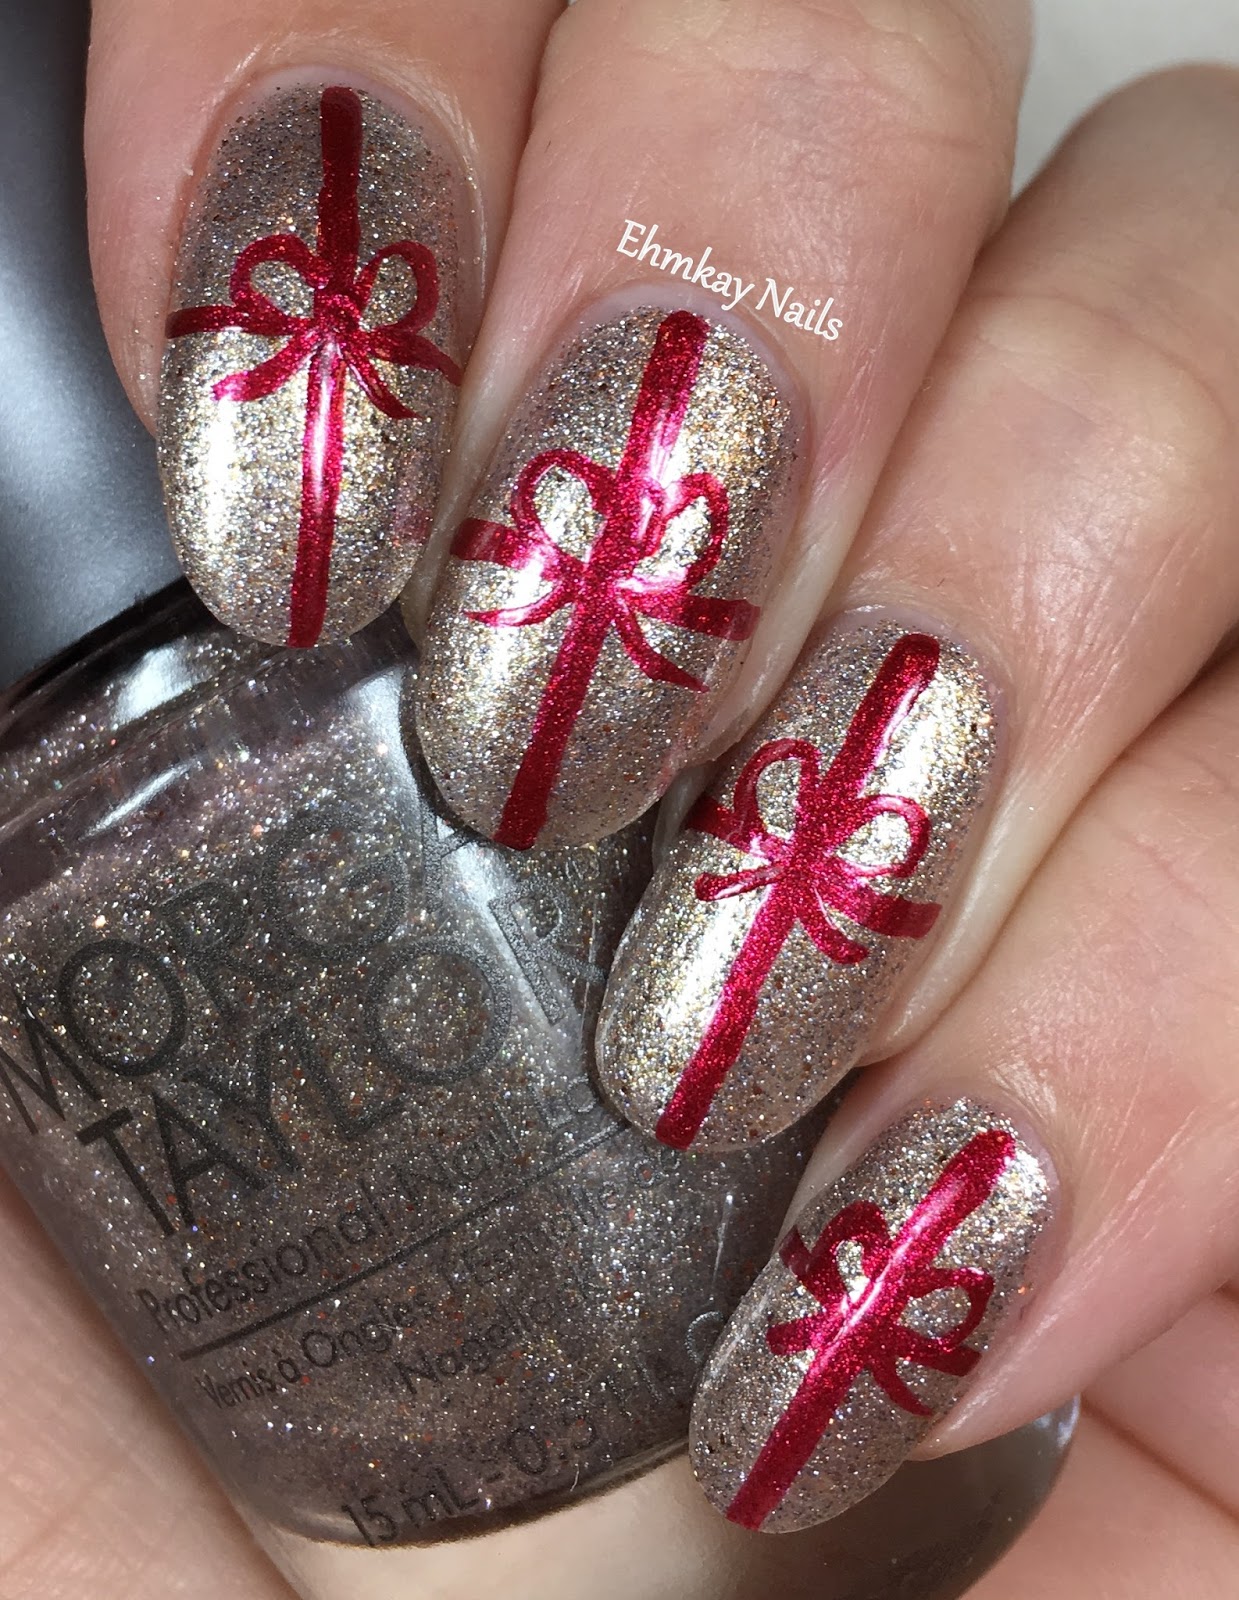 ehmkay nails: Morgan Taylor Wrapped in Glamour Gift Wrap Nail Art